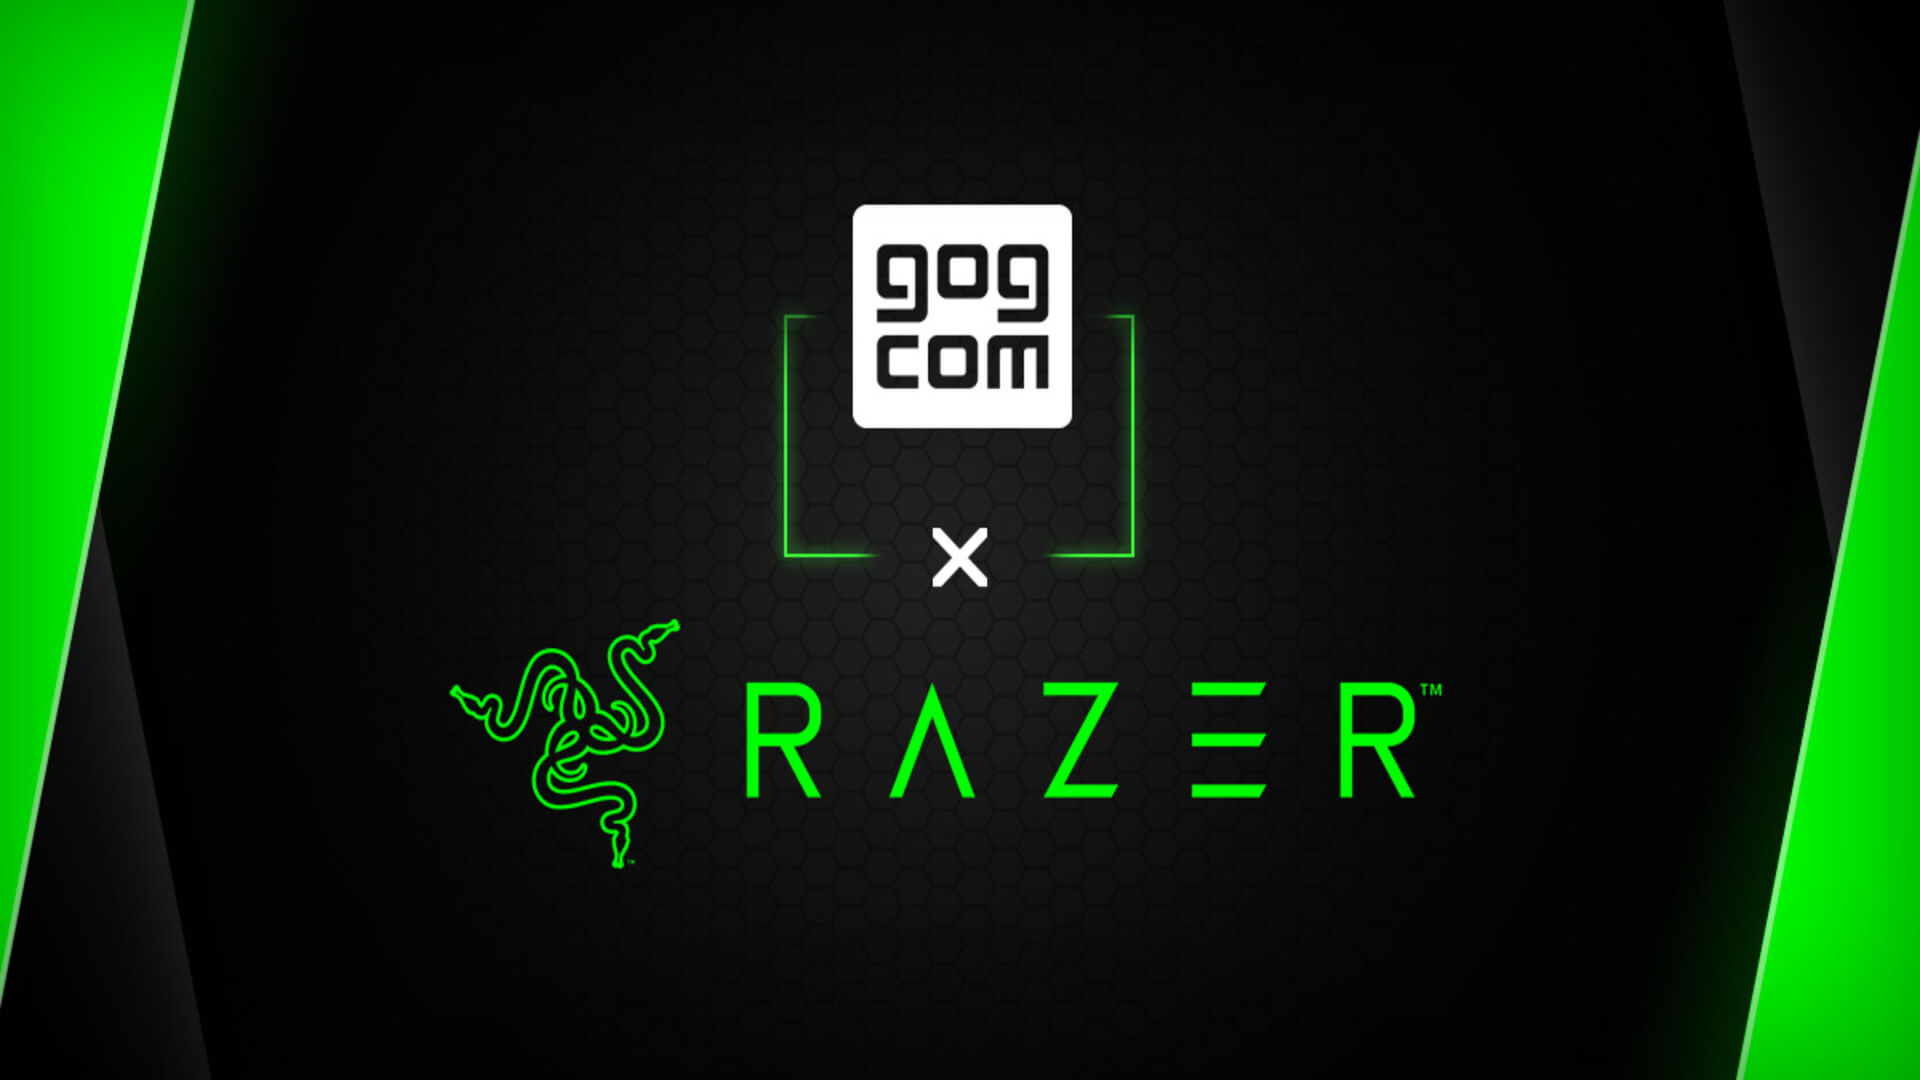 GOG and Razer Team Up For Polish Games Festival